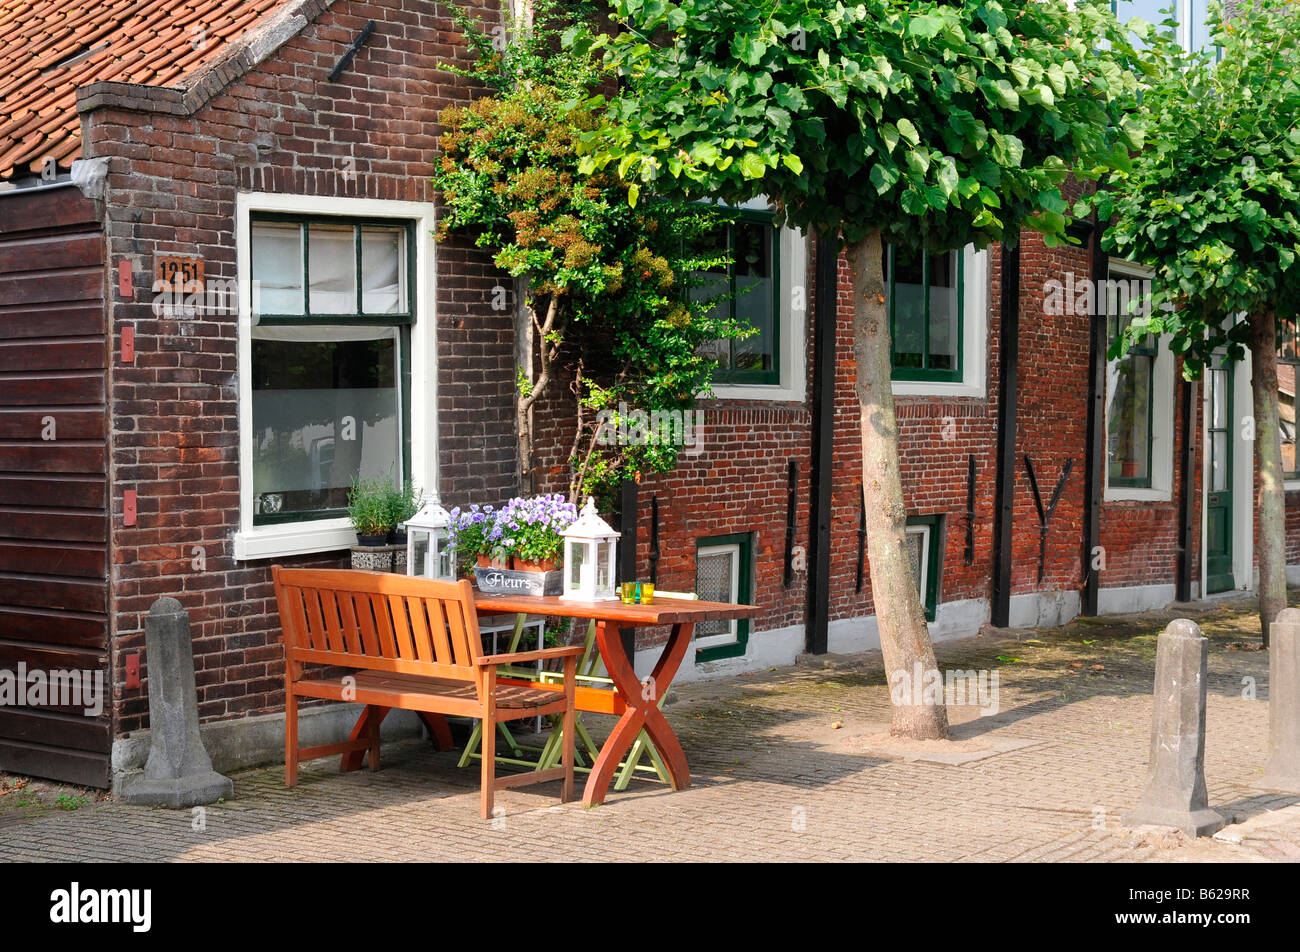 Bench, flowers on table, Sloten, Amsterdam, Netherlands, Europe Stock Photo